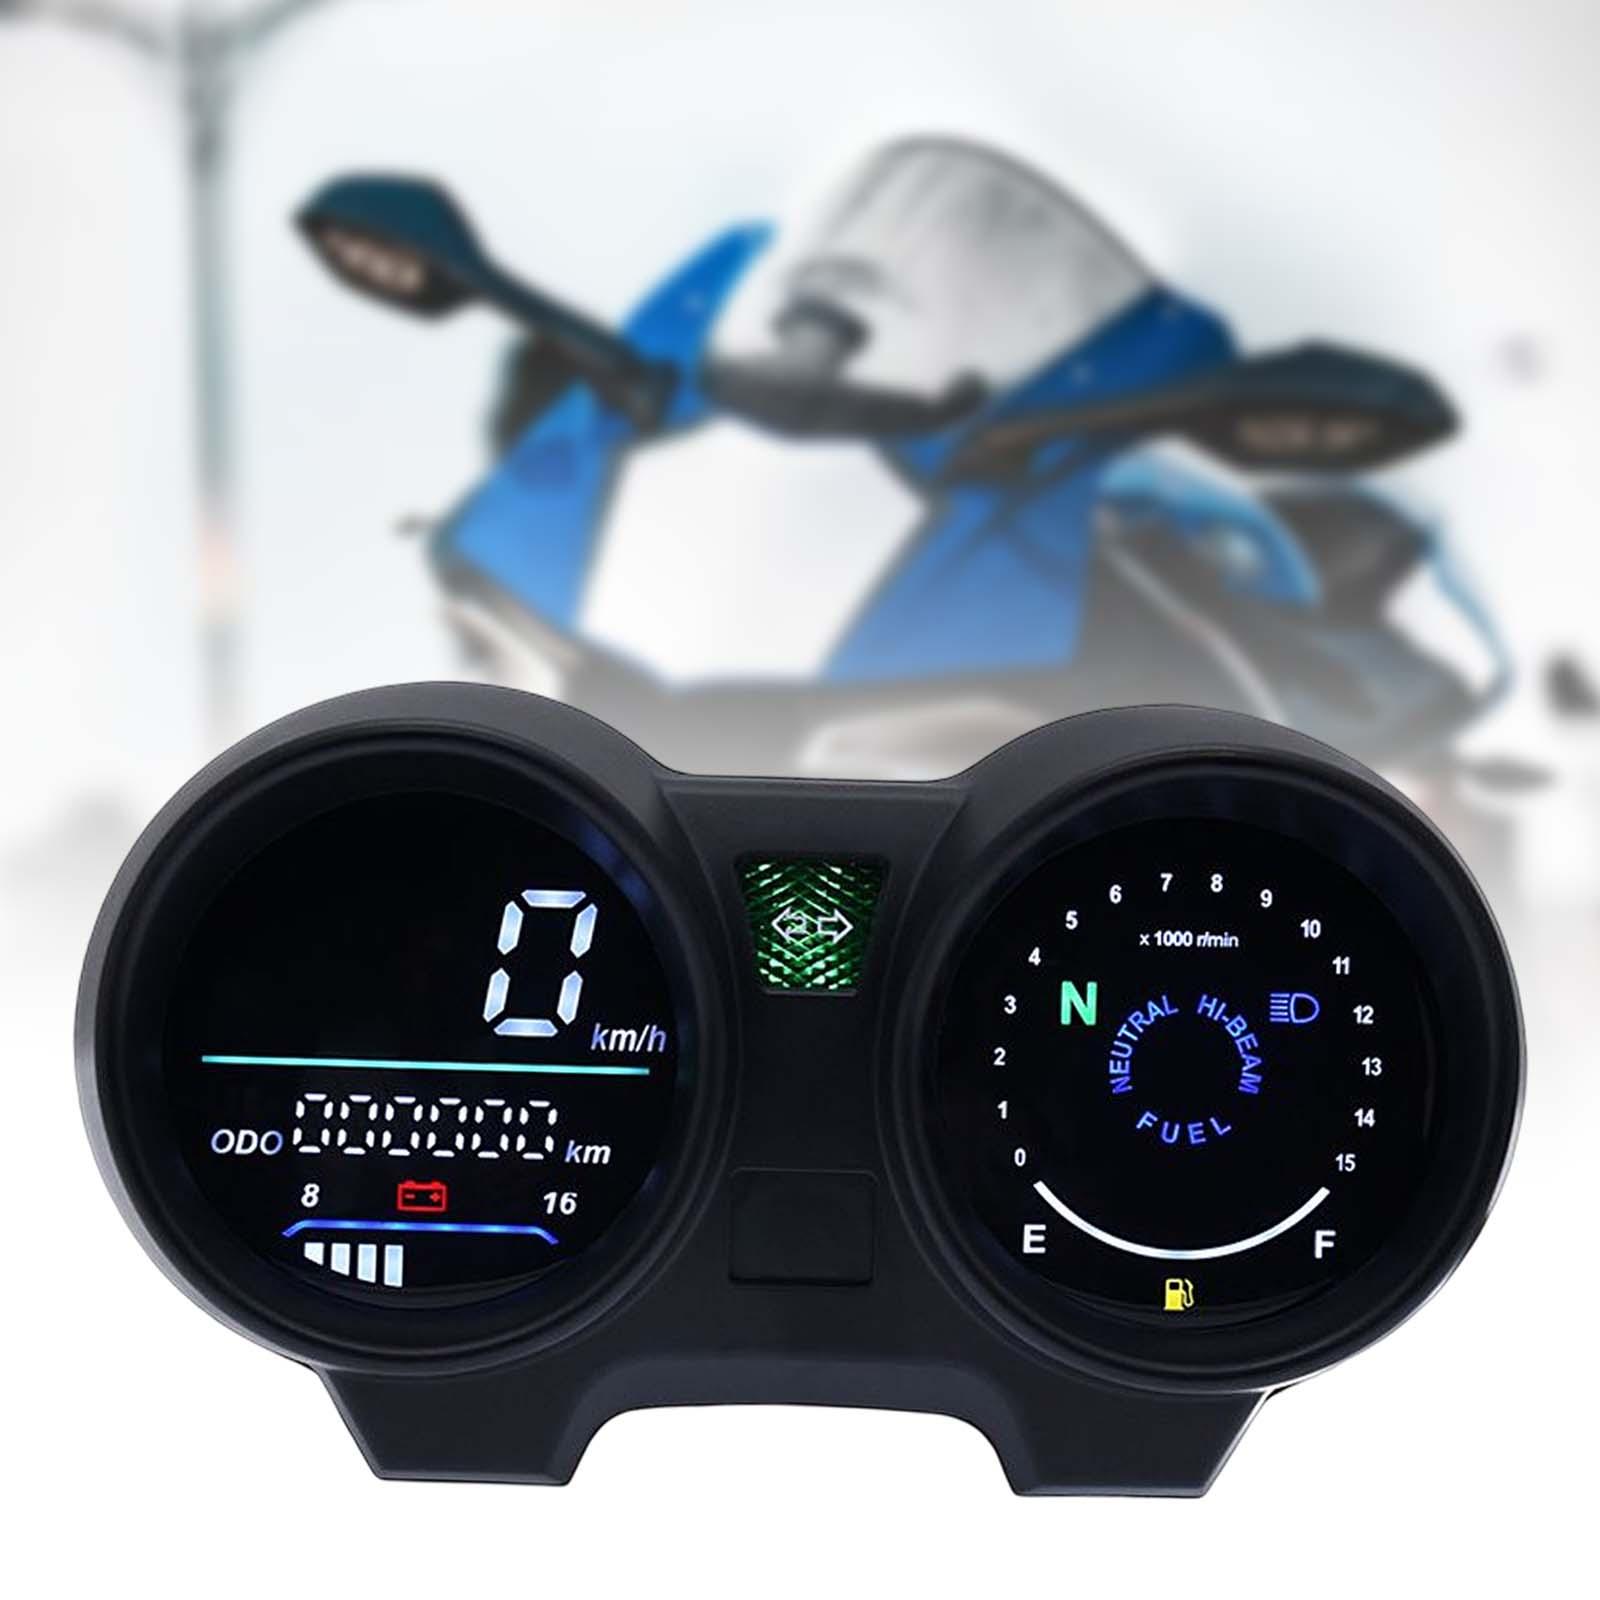 Plastic Motorbike LED Digital Dashboard Electronic Speedometer Tachometer RPM Meter for Brazil Titan150 Fan150 CG150 Accessories